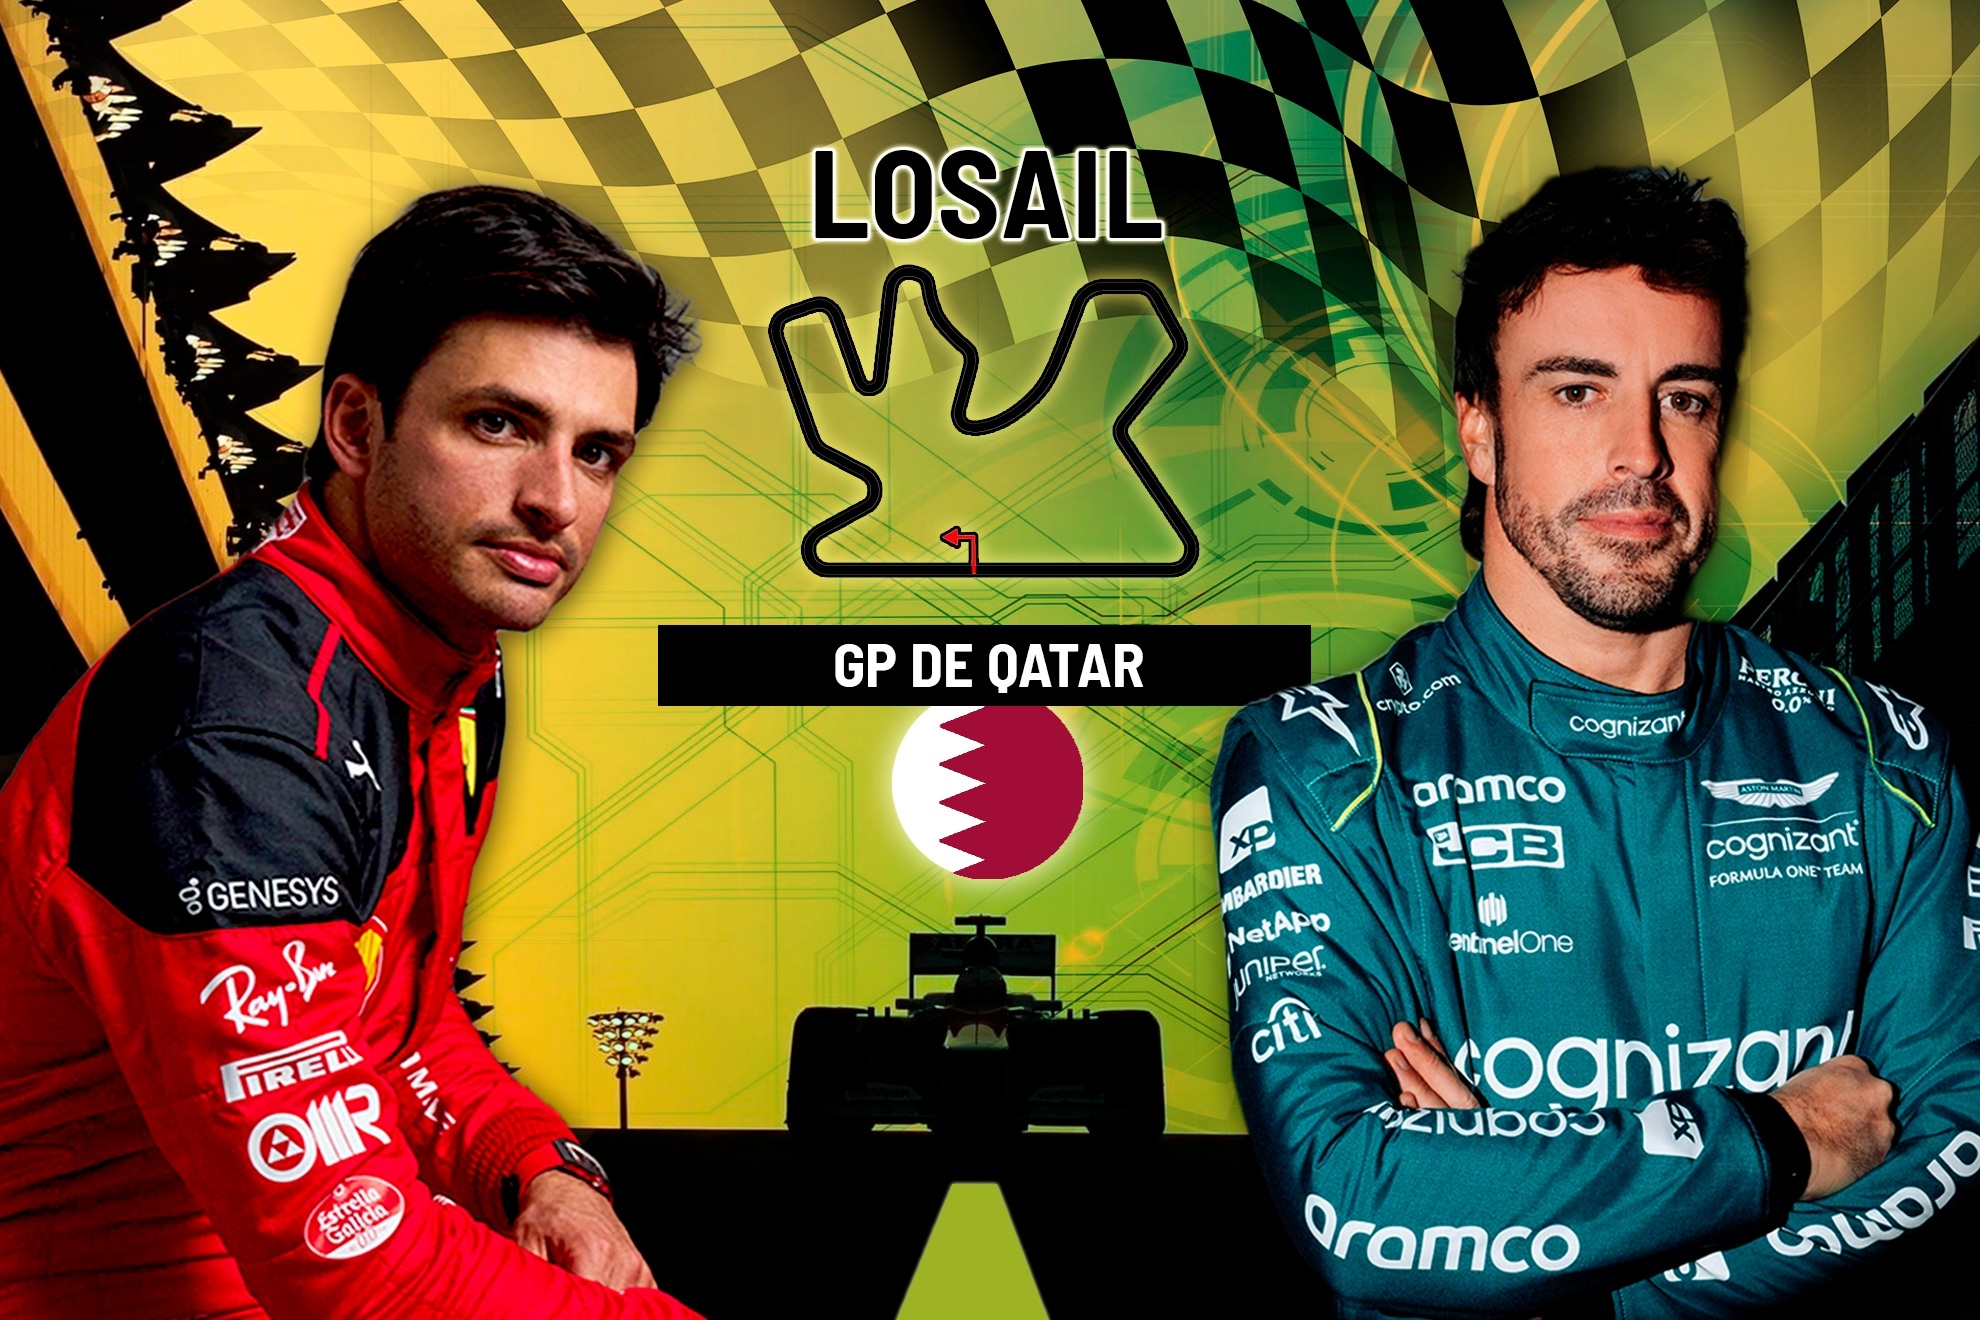 Carrera del GP de Qatar de F1: a qu� hora es, parrilla, canal y d�nde ver hoy en TV y online